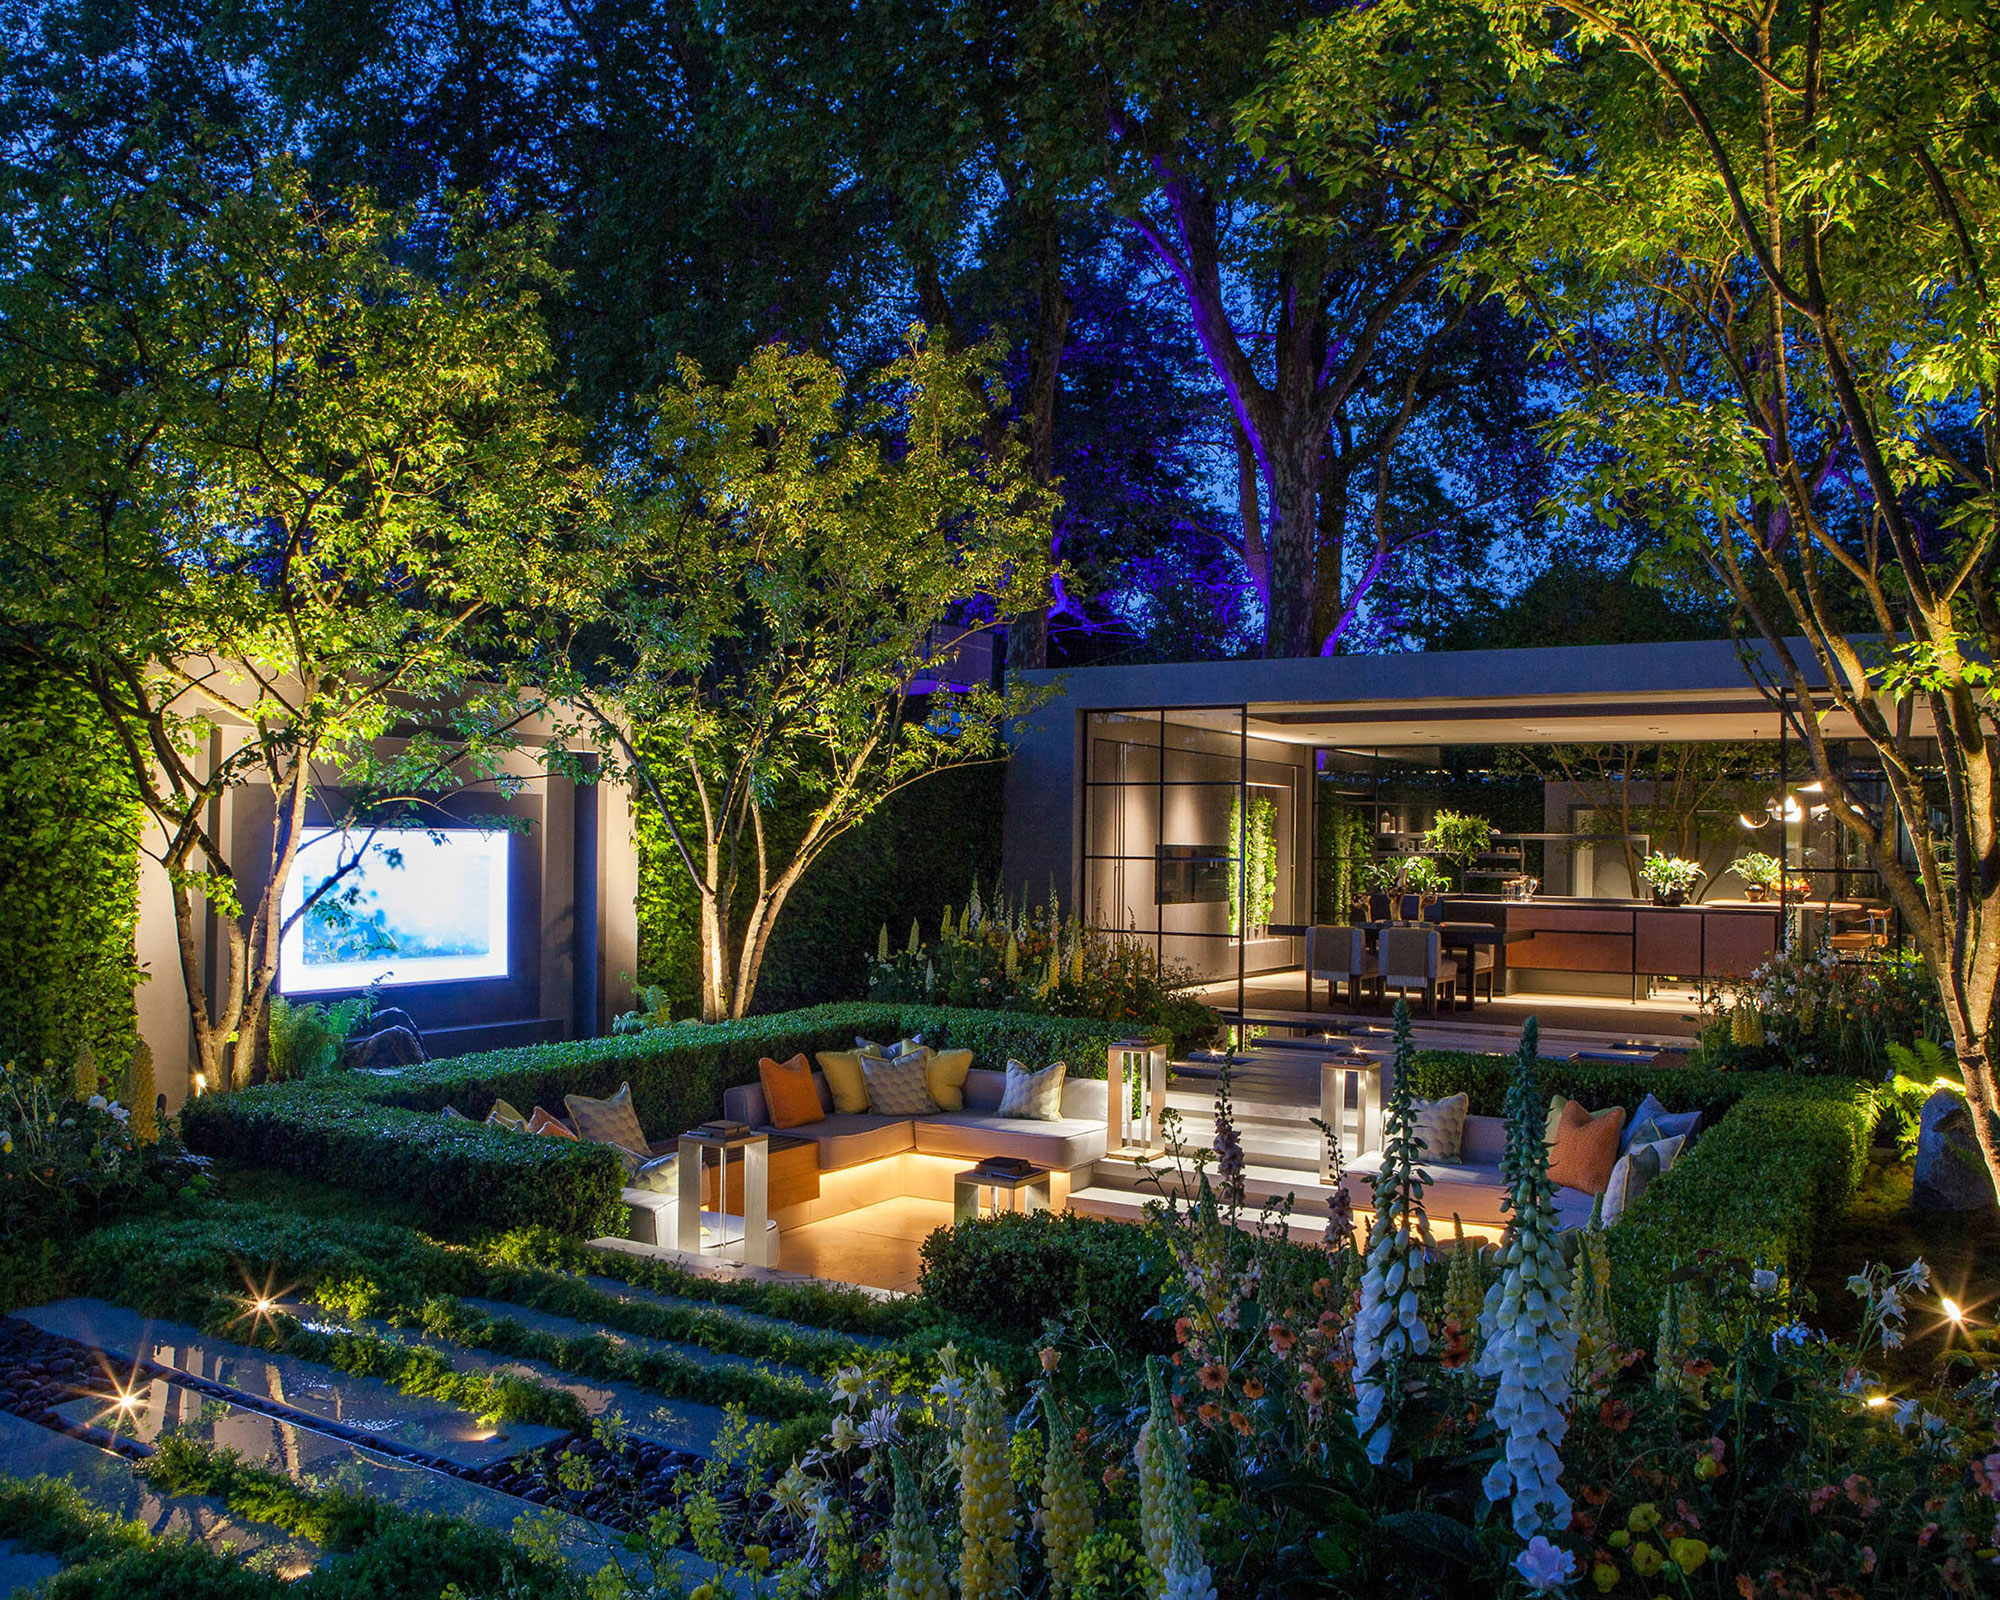 Backyard lighting ideas 18 ways to illuminate beautifully   Homes ...